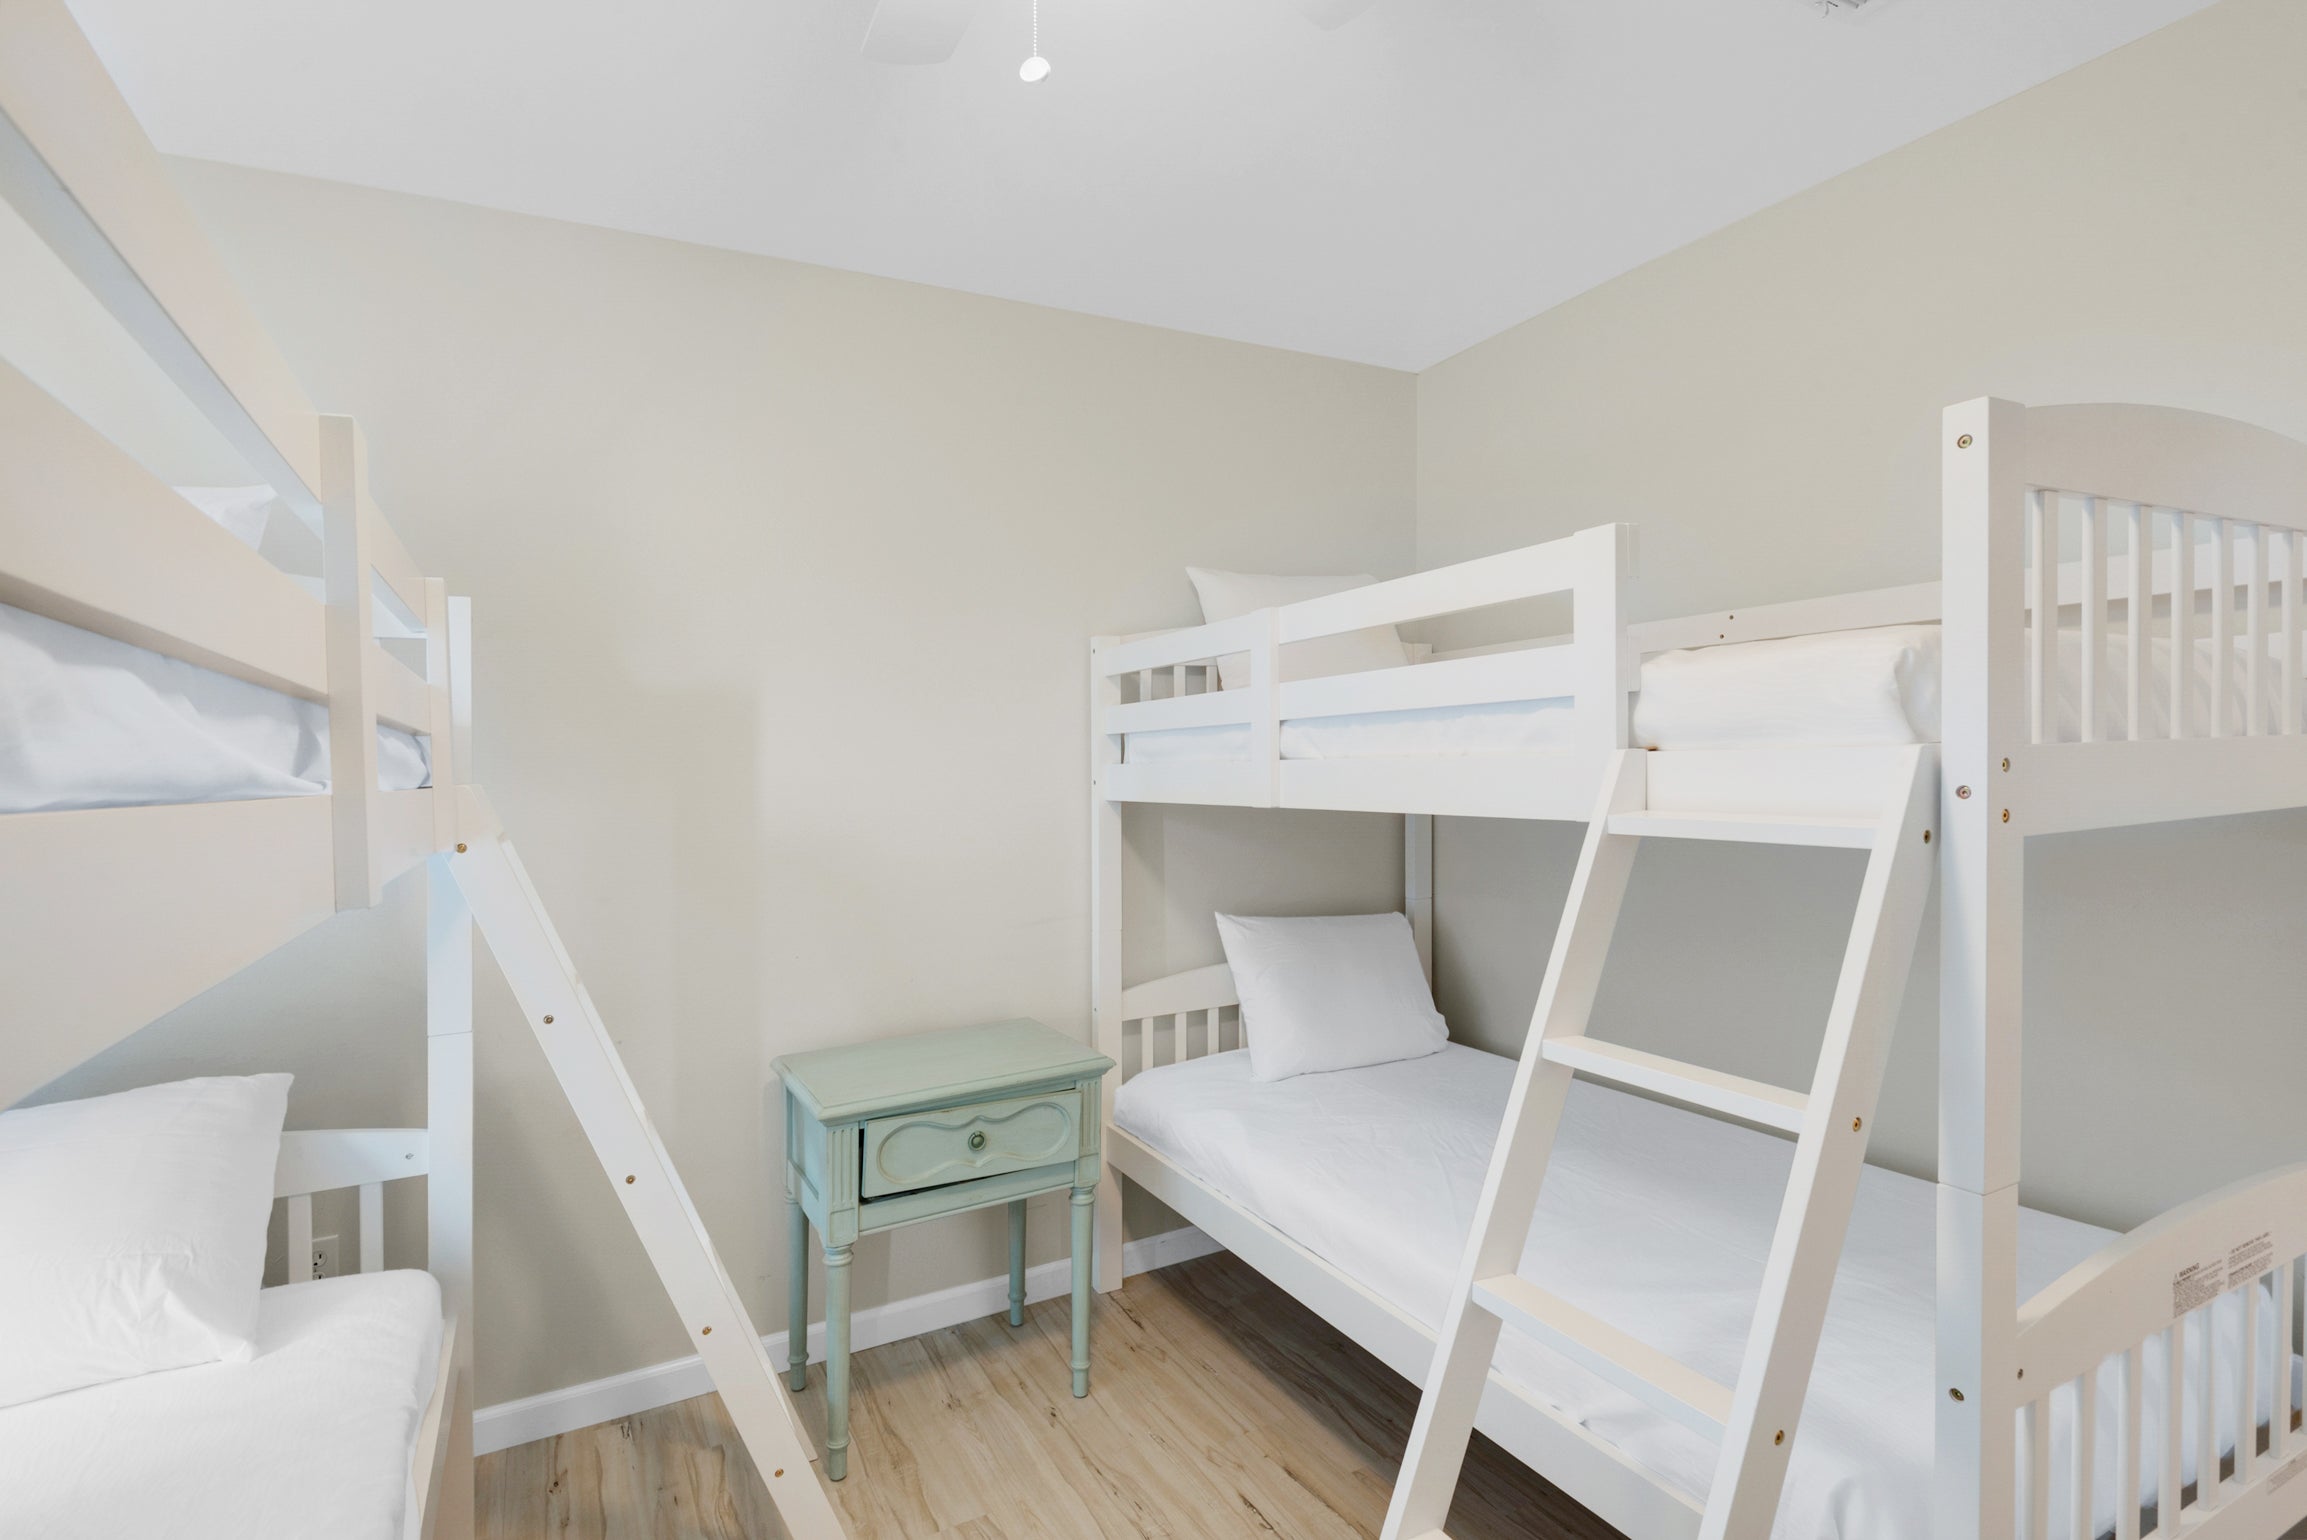 Bunk+room+with+2+bunk+beds